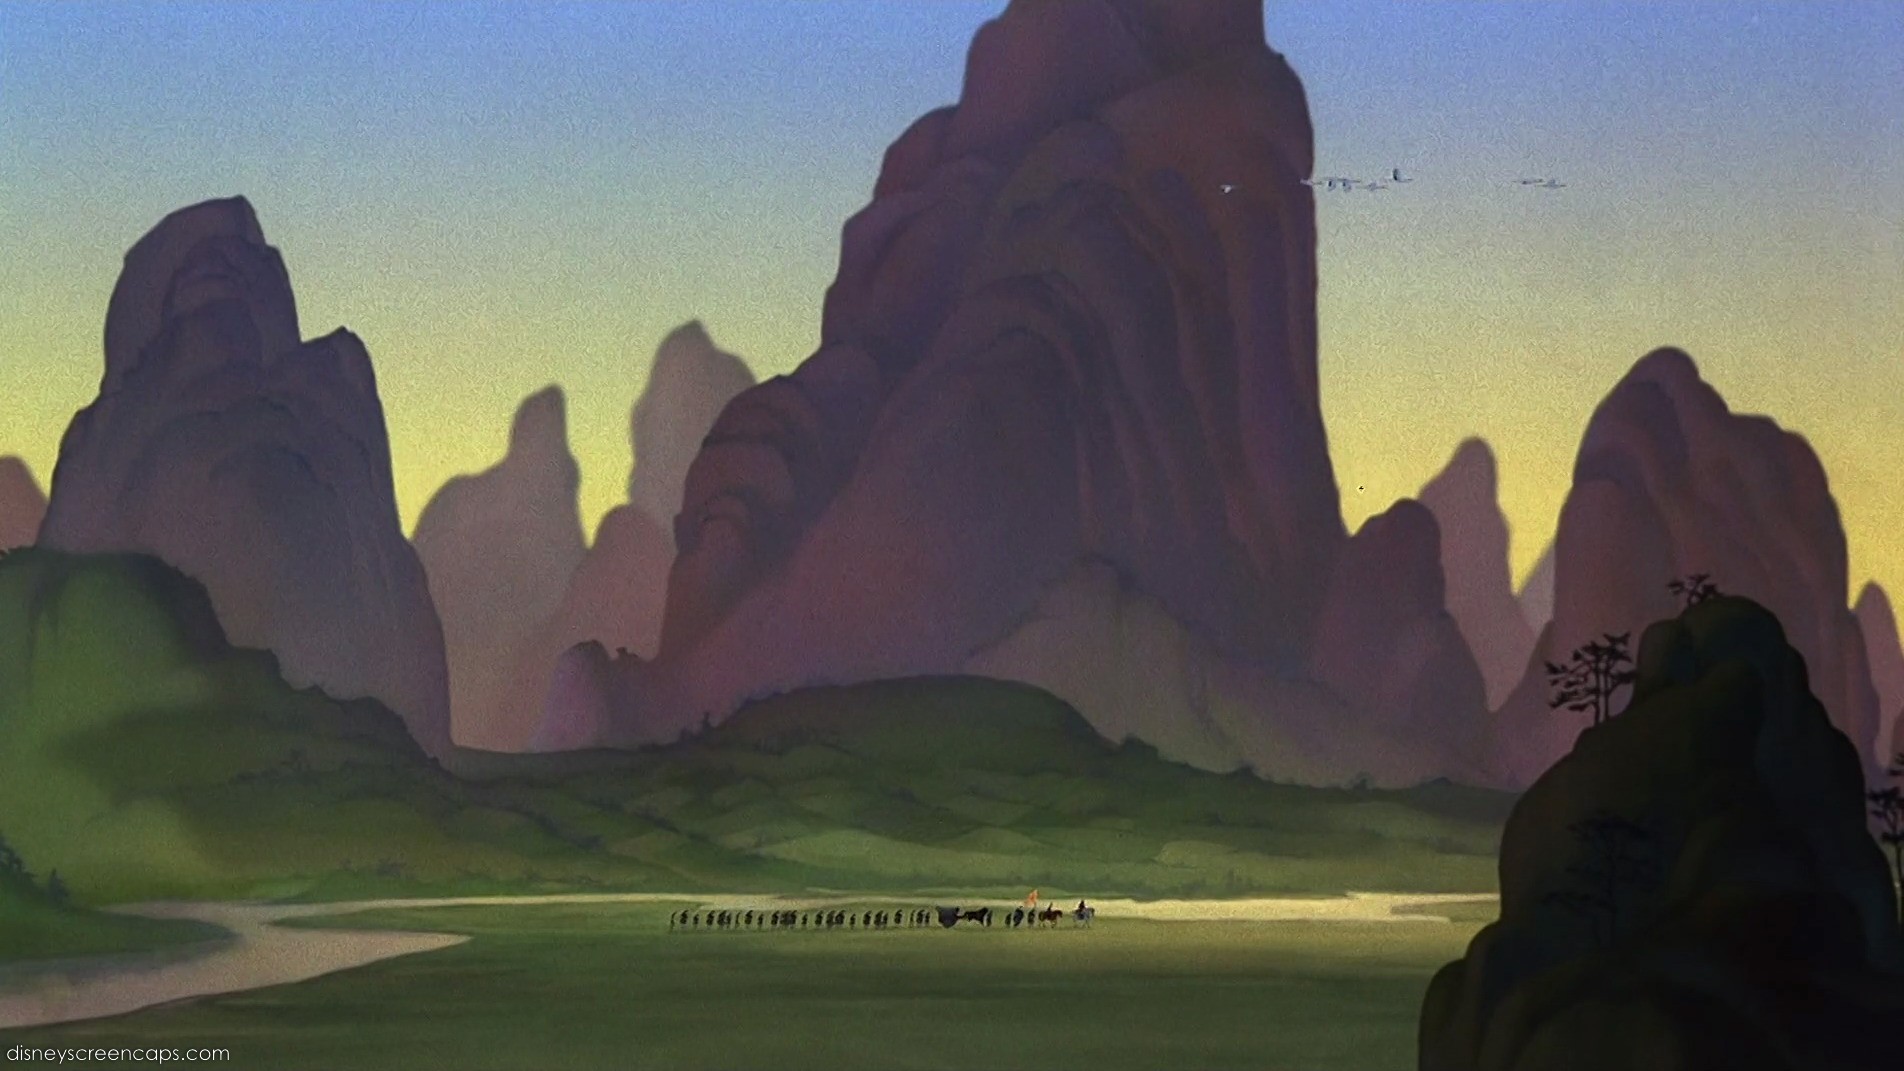 Empty Backdrop From Mulan Disney Crossover Image